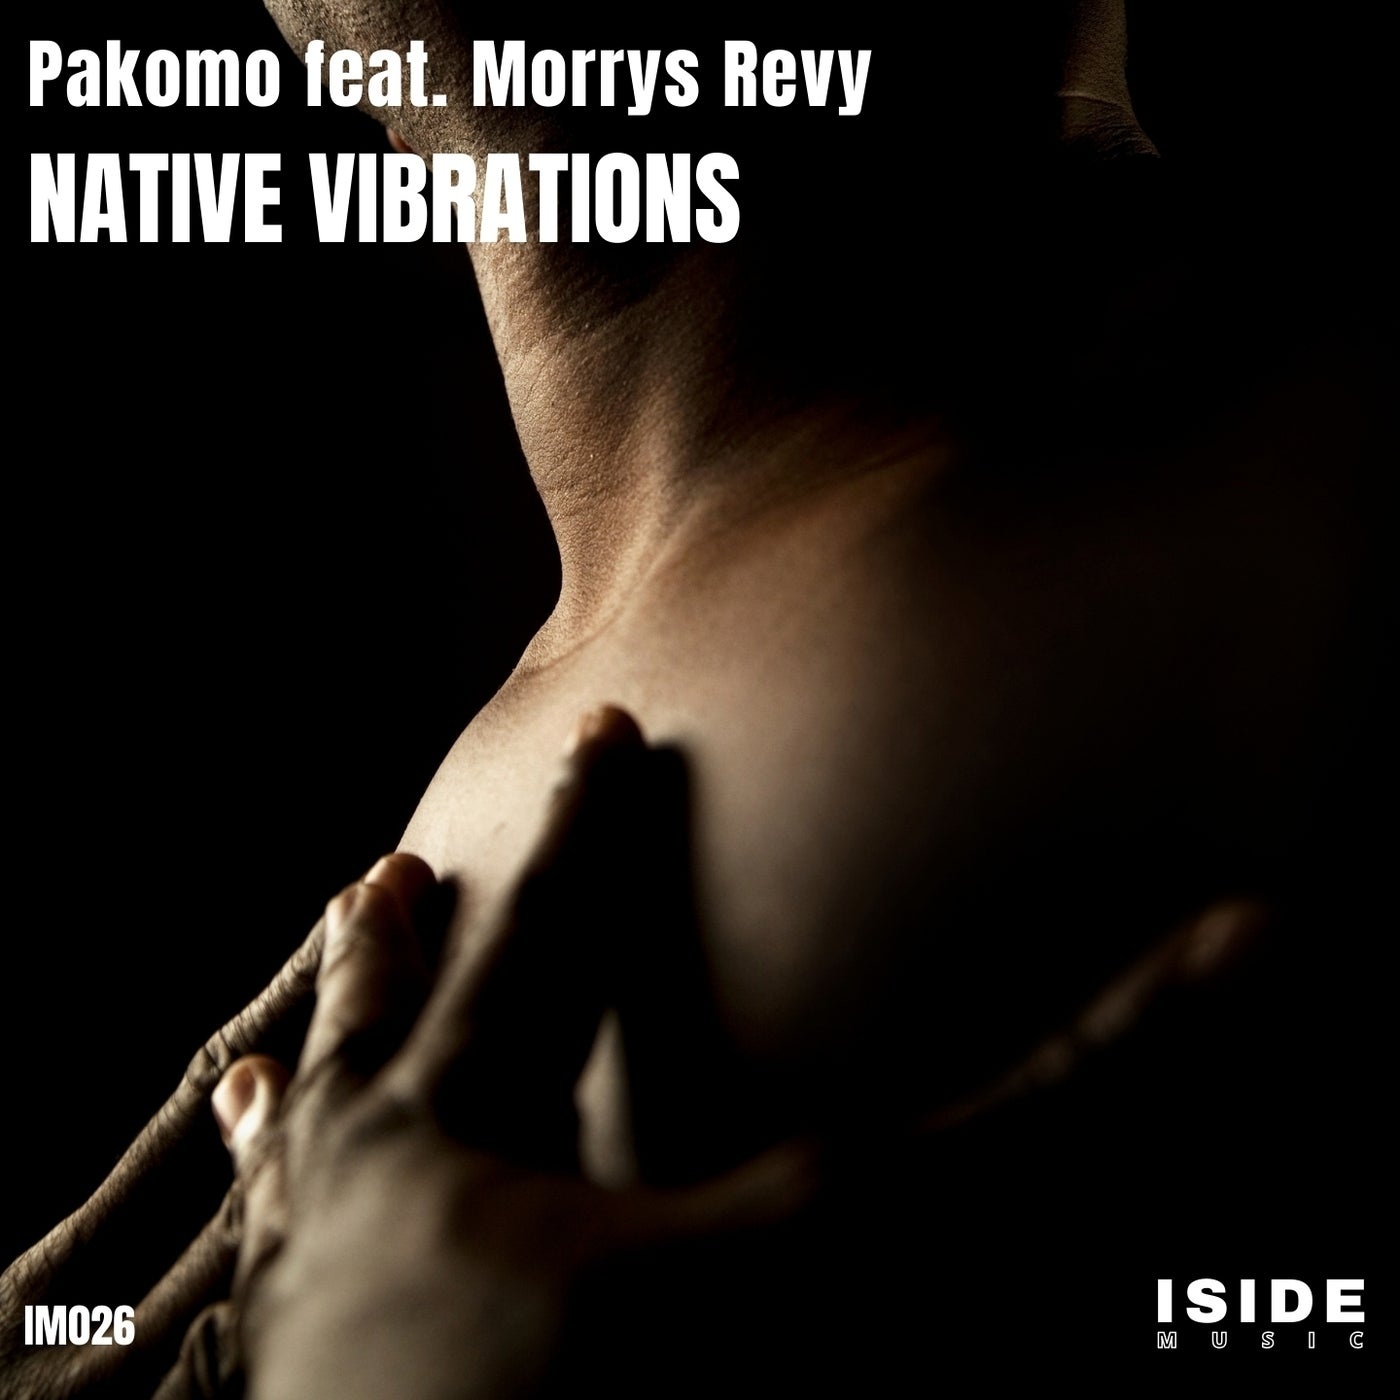 Pakomo - Native Vibrations (feat. Morrys Revy) [IM026]